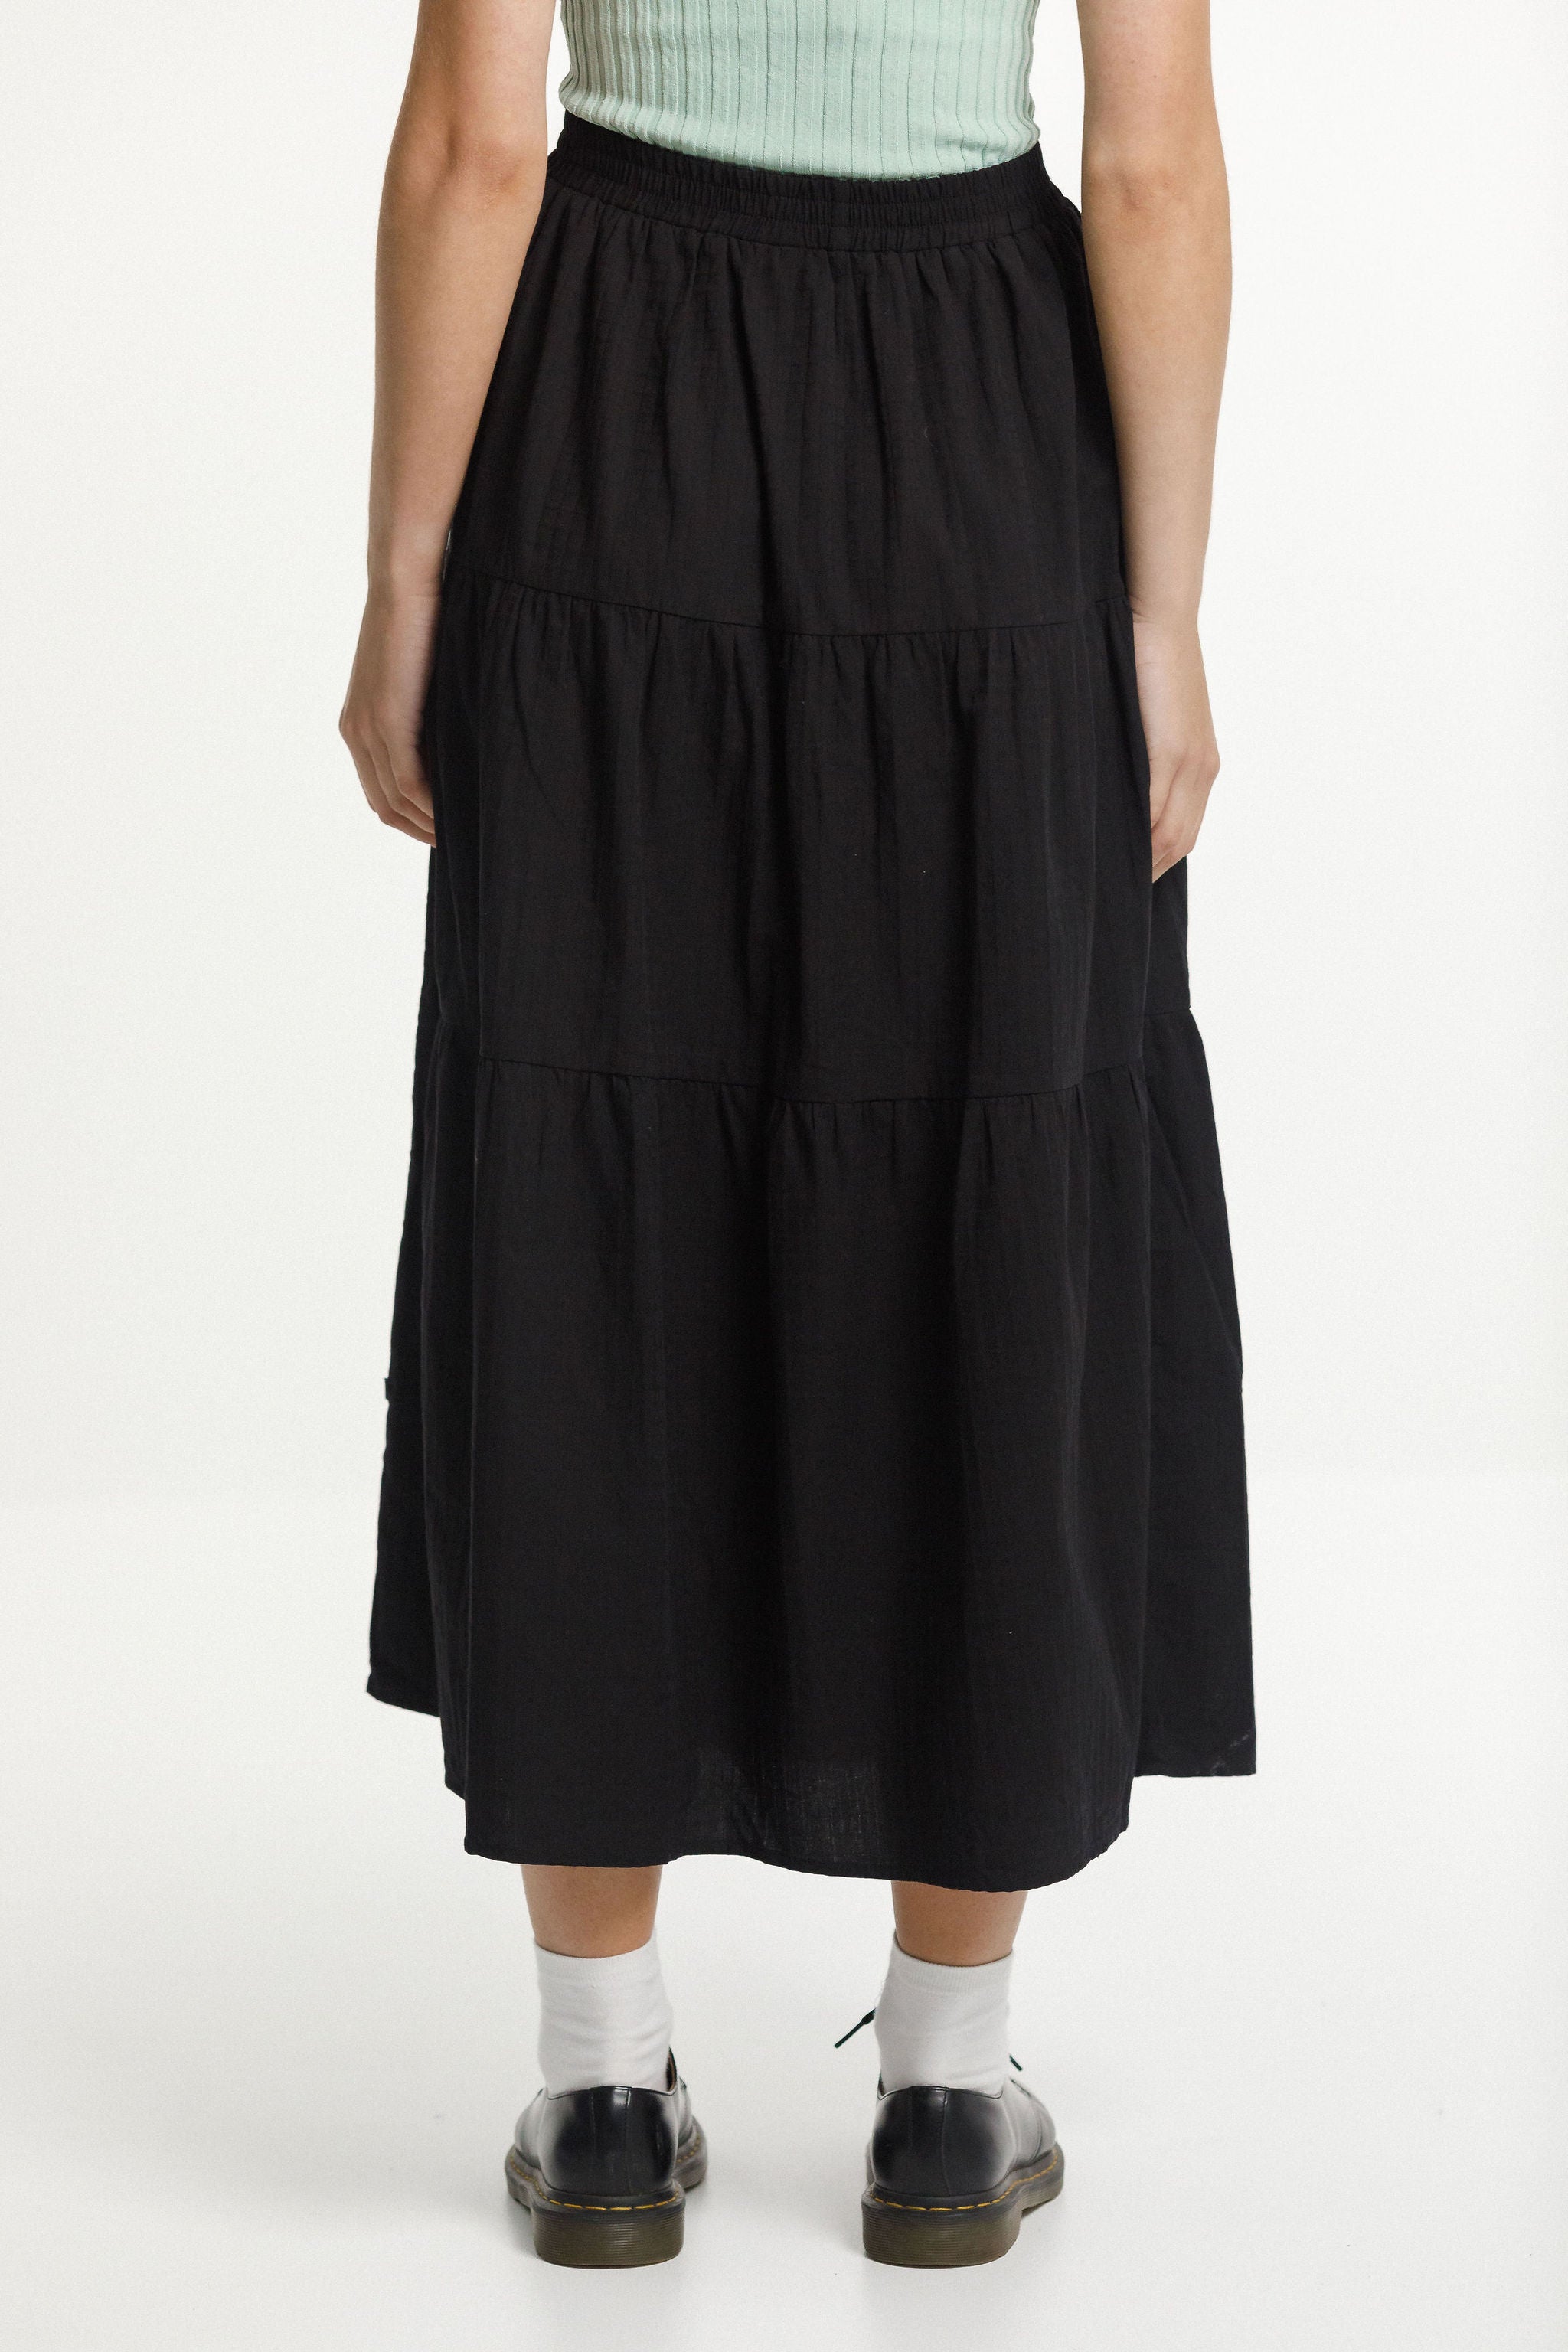 Clara Skirt Replen - Black